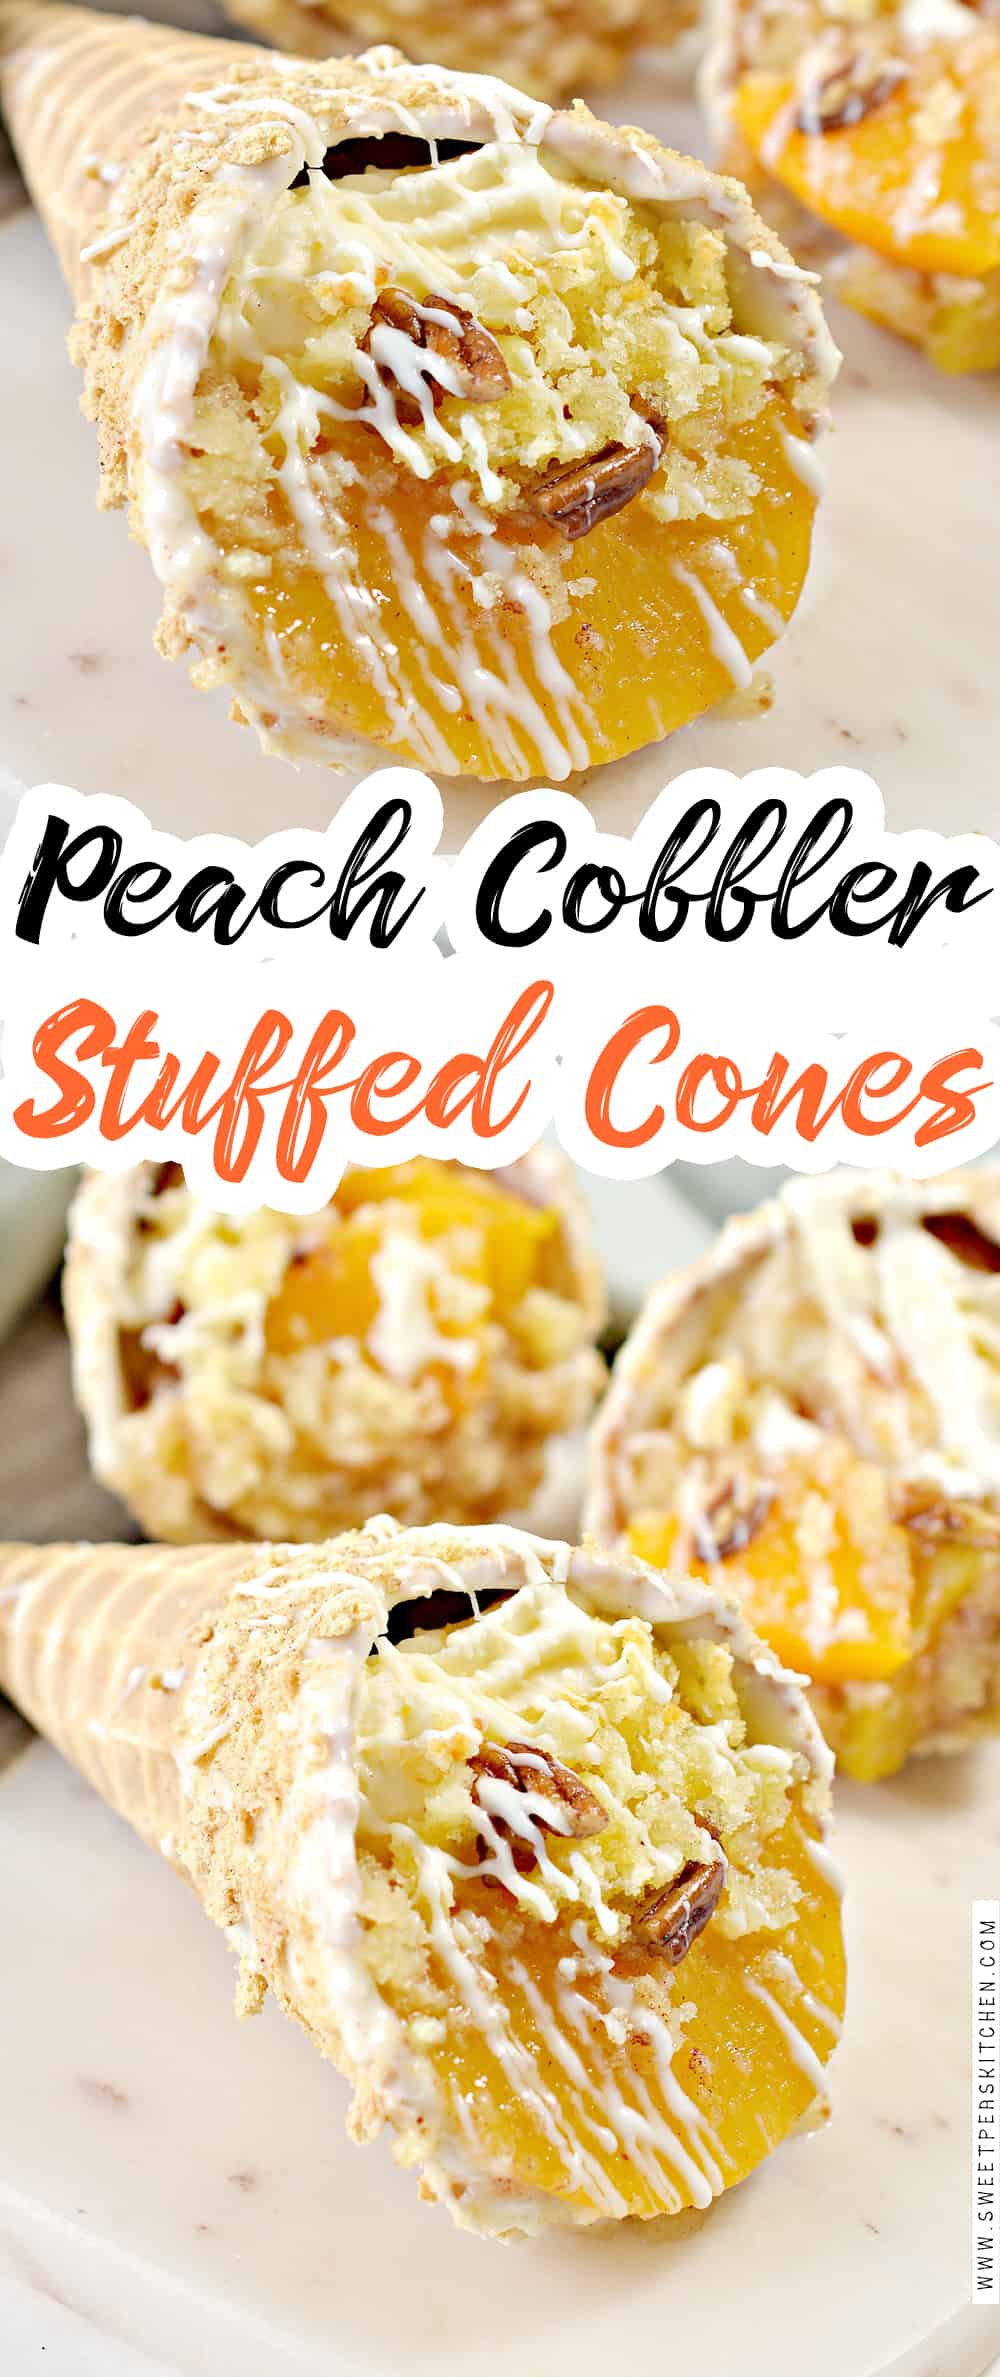 Peach Cobbler Stuffed Cones on Pinterest